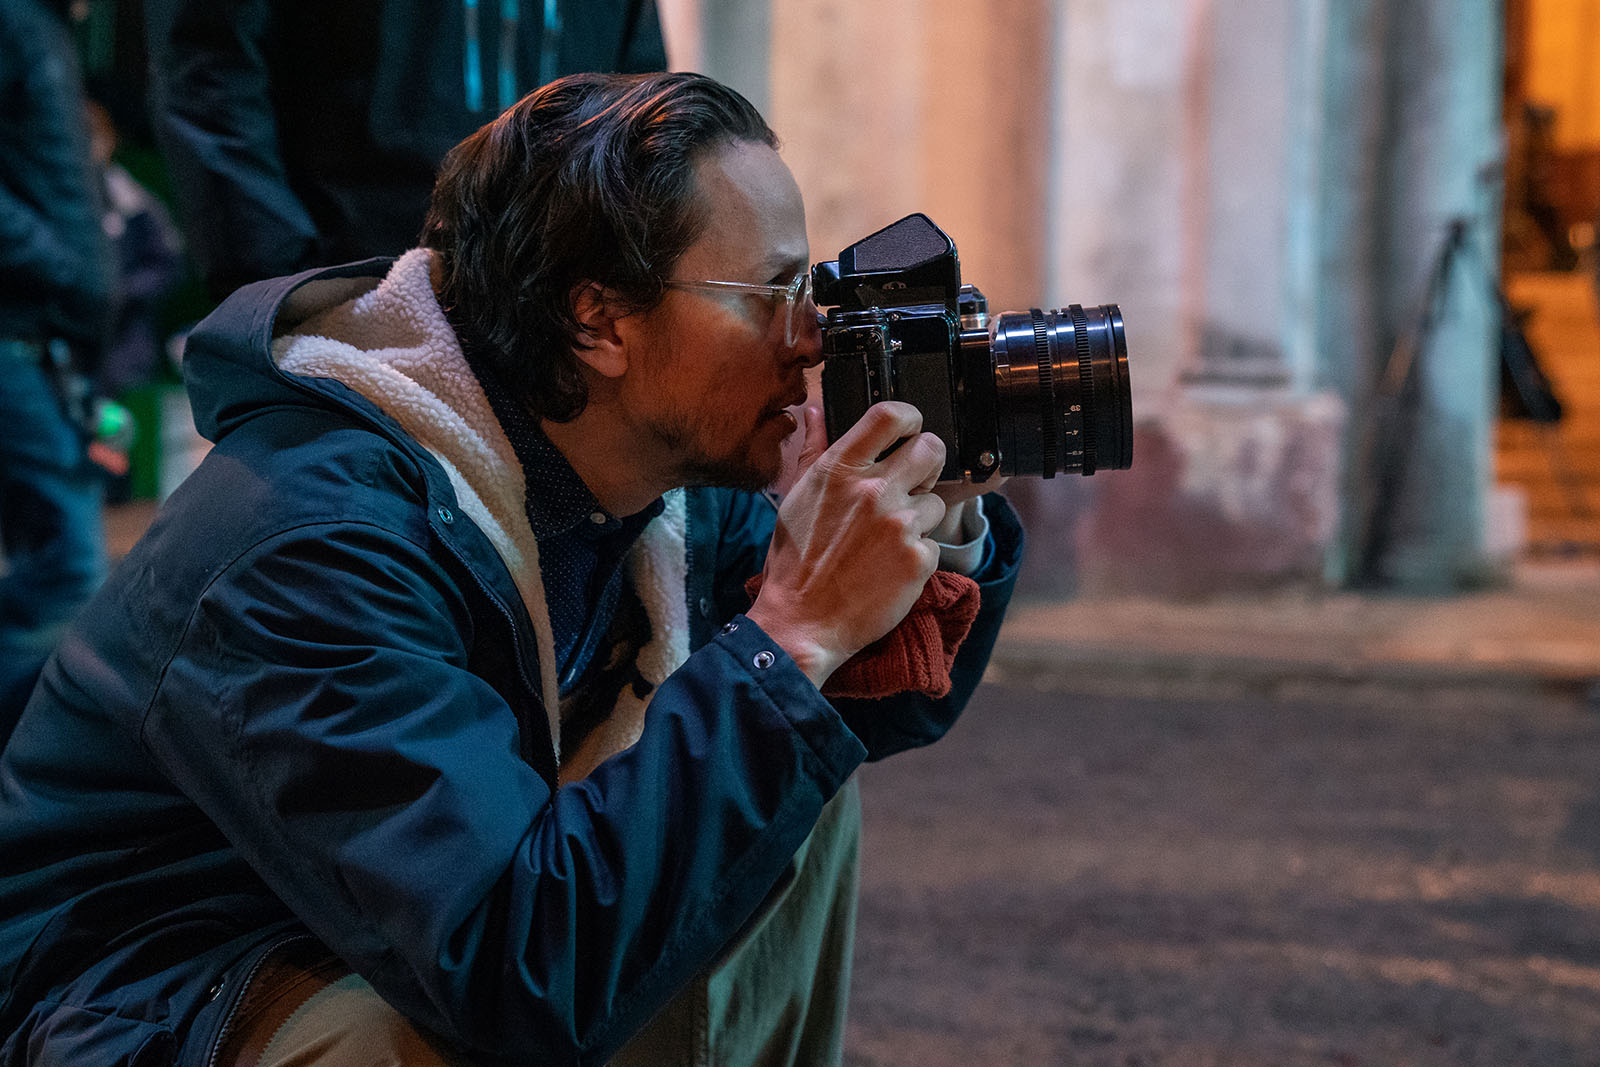 Writer/director Cary Joji Fukanaga frames the view with an SLR camera.